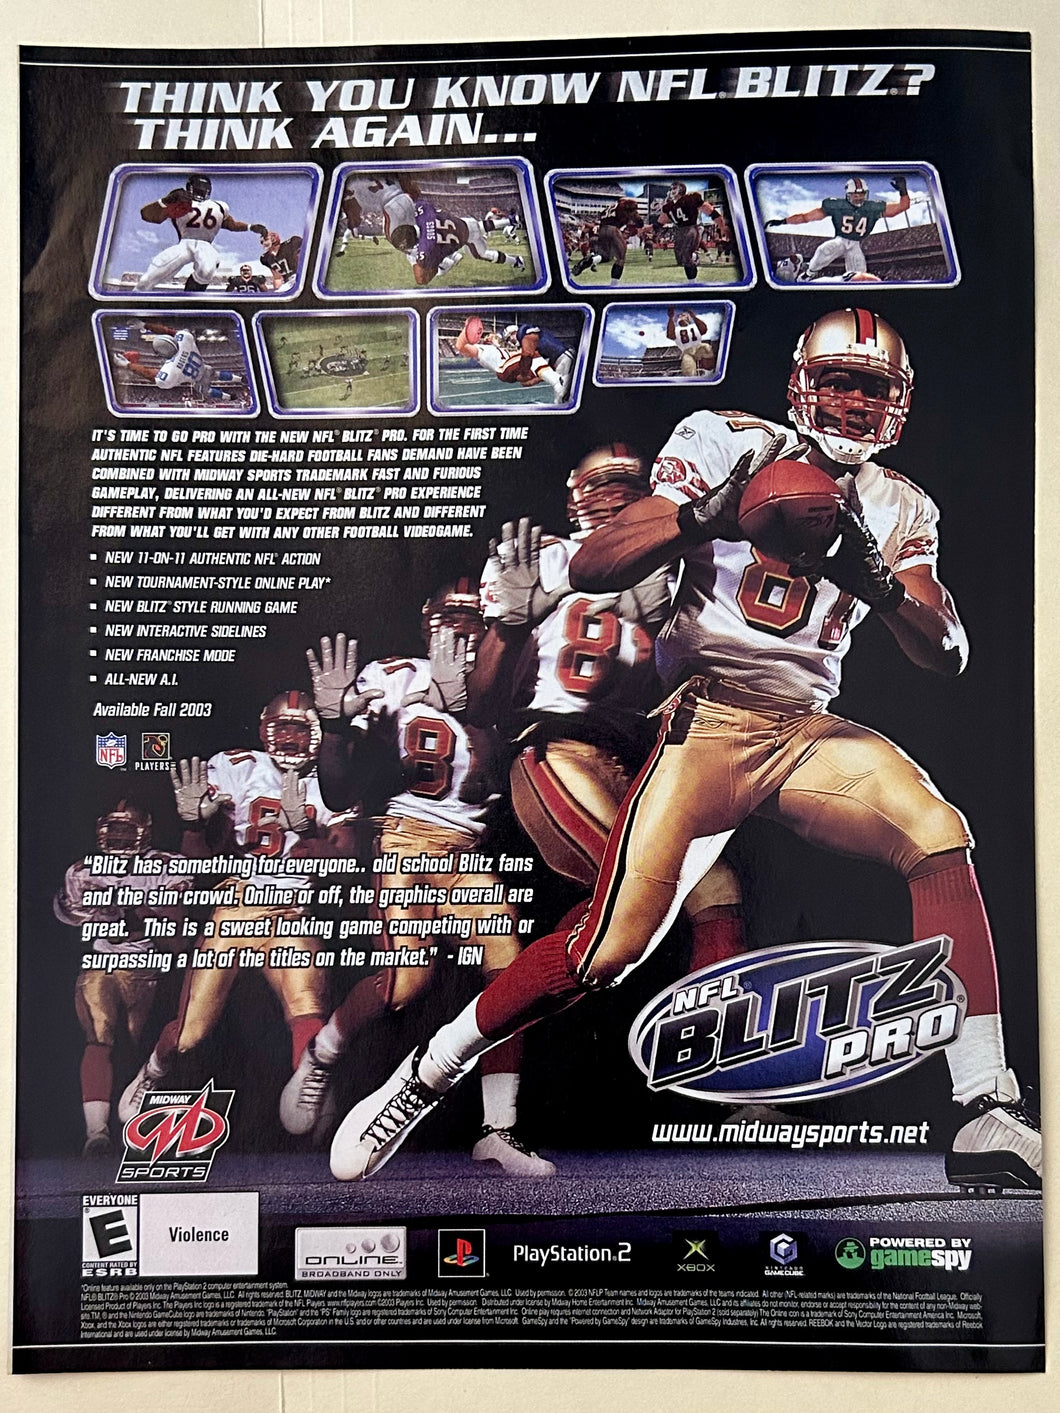 NFL Blitz Pro - PS2 Xbox NGC - Original Vintage Advertisement - Print Ads - Laminated A4 Poster